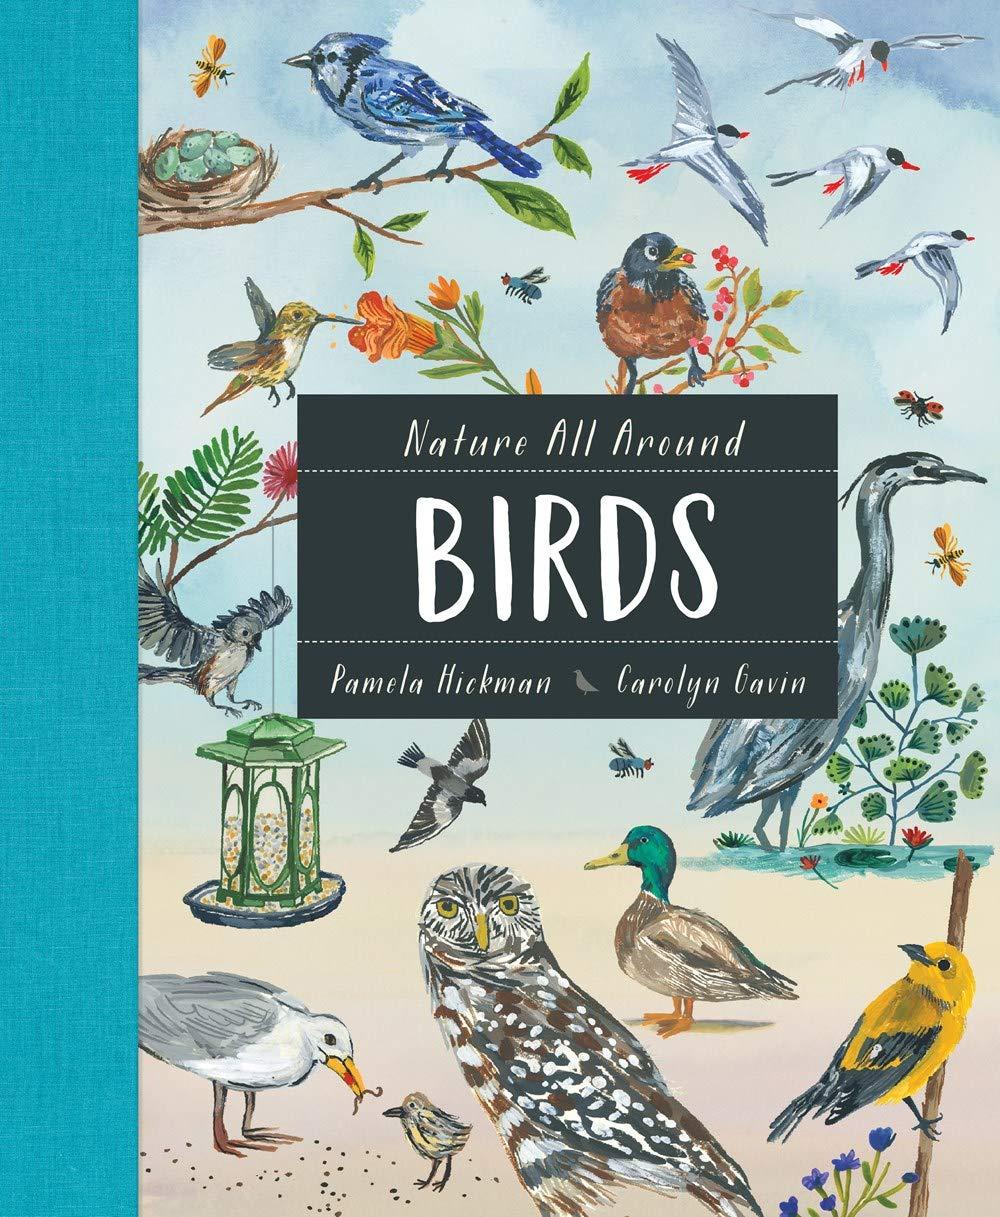 Birds by Pamela Hickman book cover